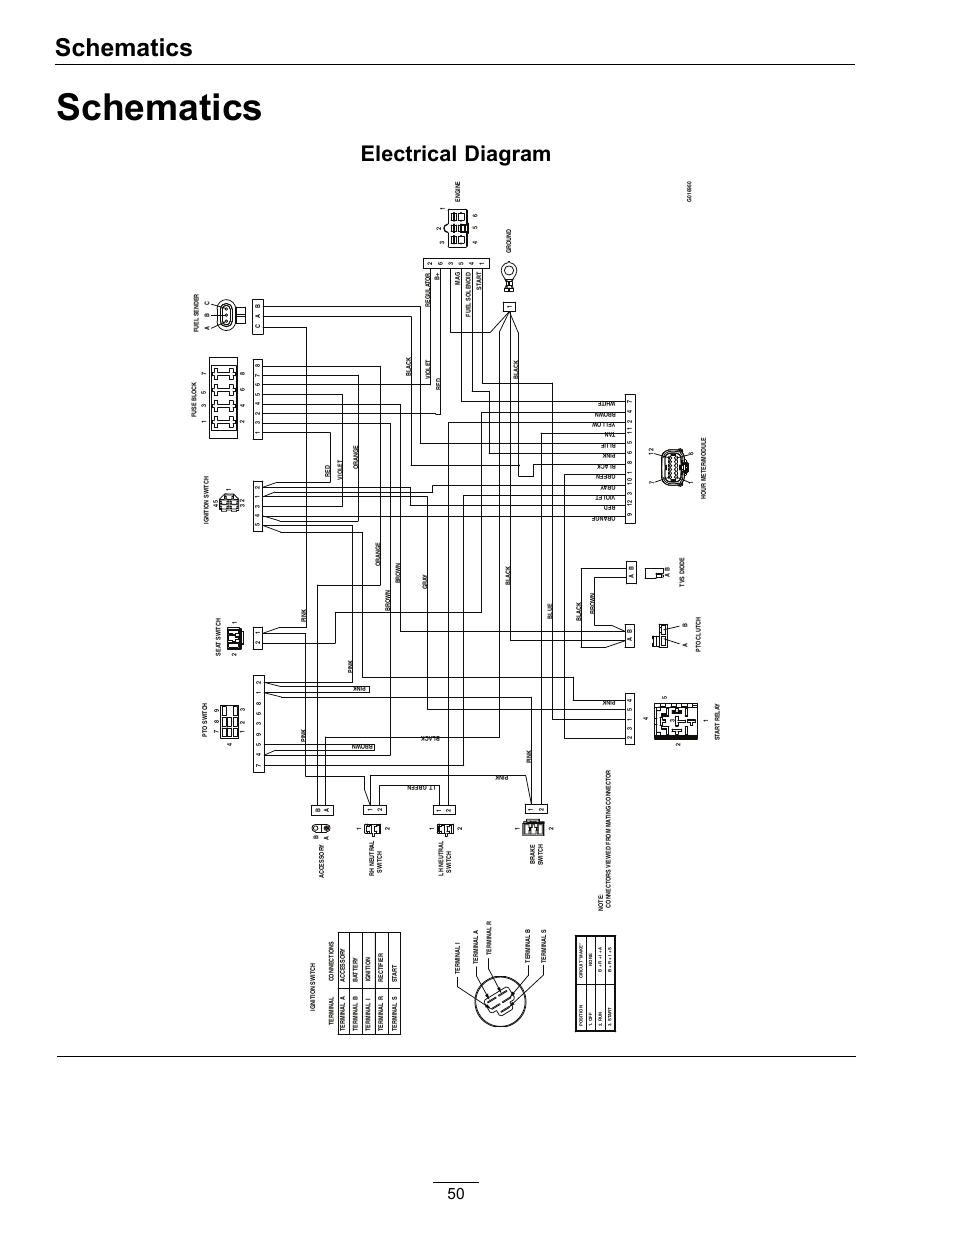 wiring diagram for leviton 5246